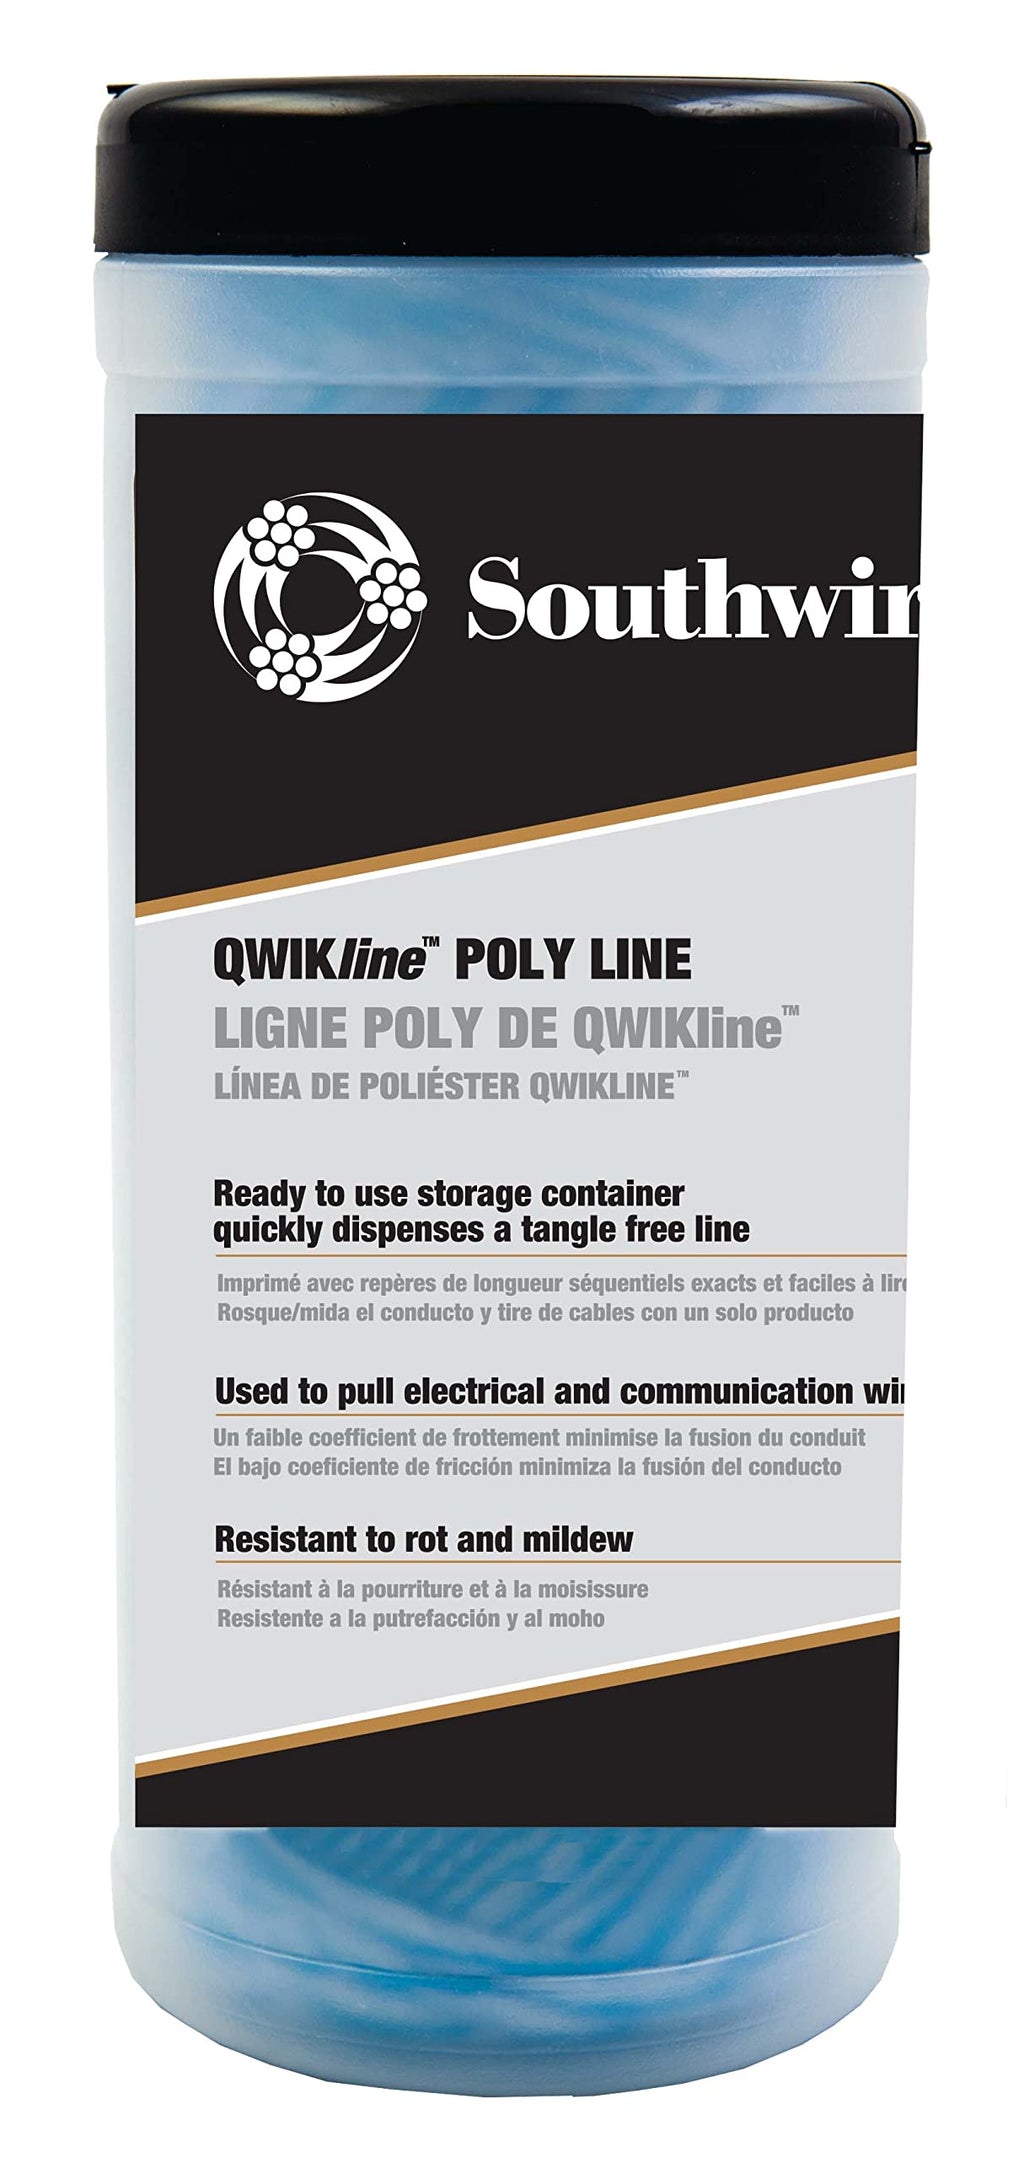  [AUSTRALIA] - Southwire PL500 Ligne Poly Line 210lb tensile strength, 500 ft 500 Feet